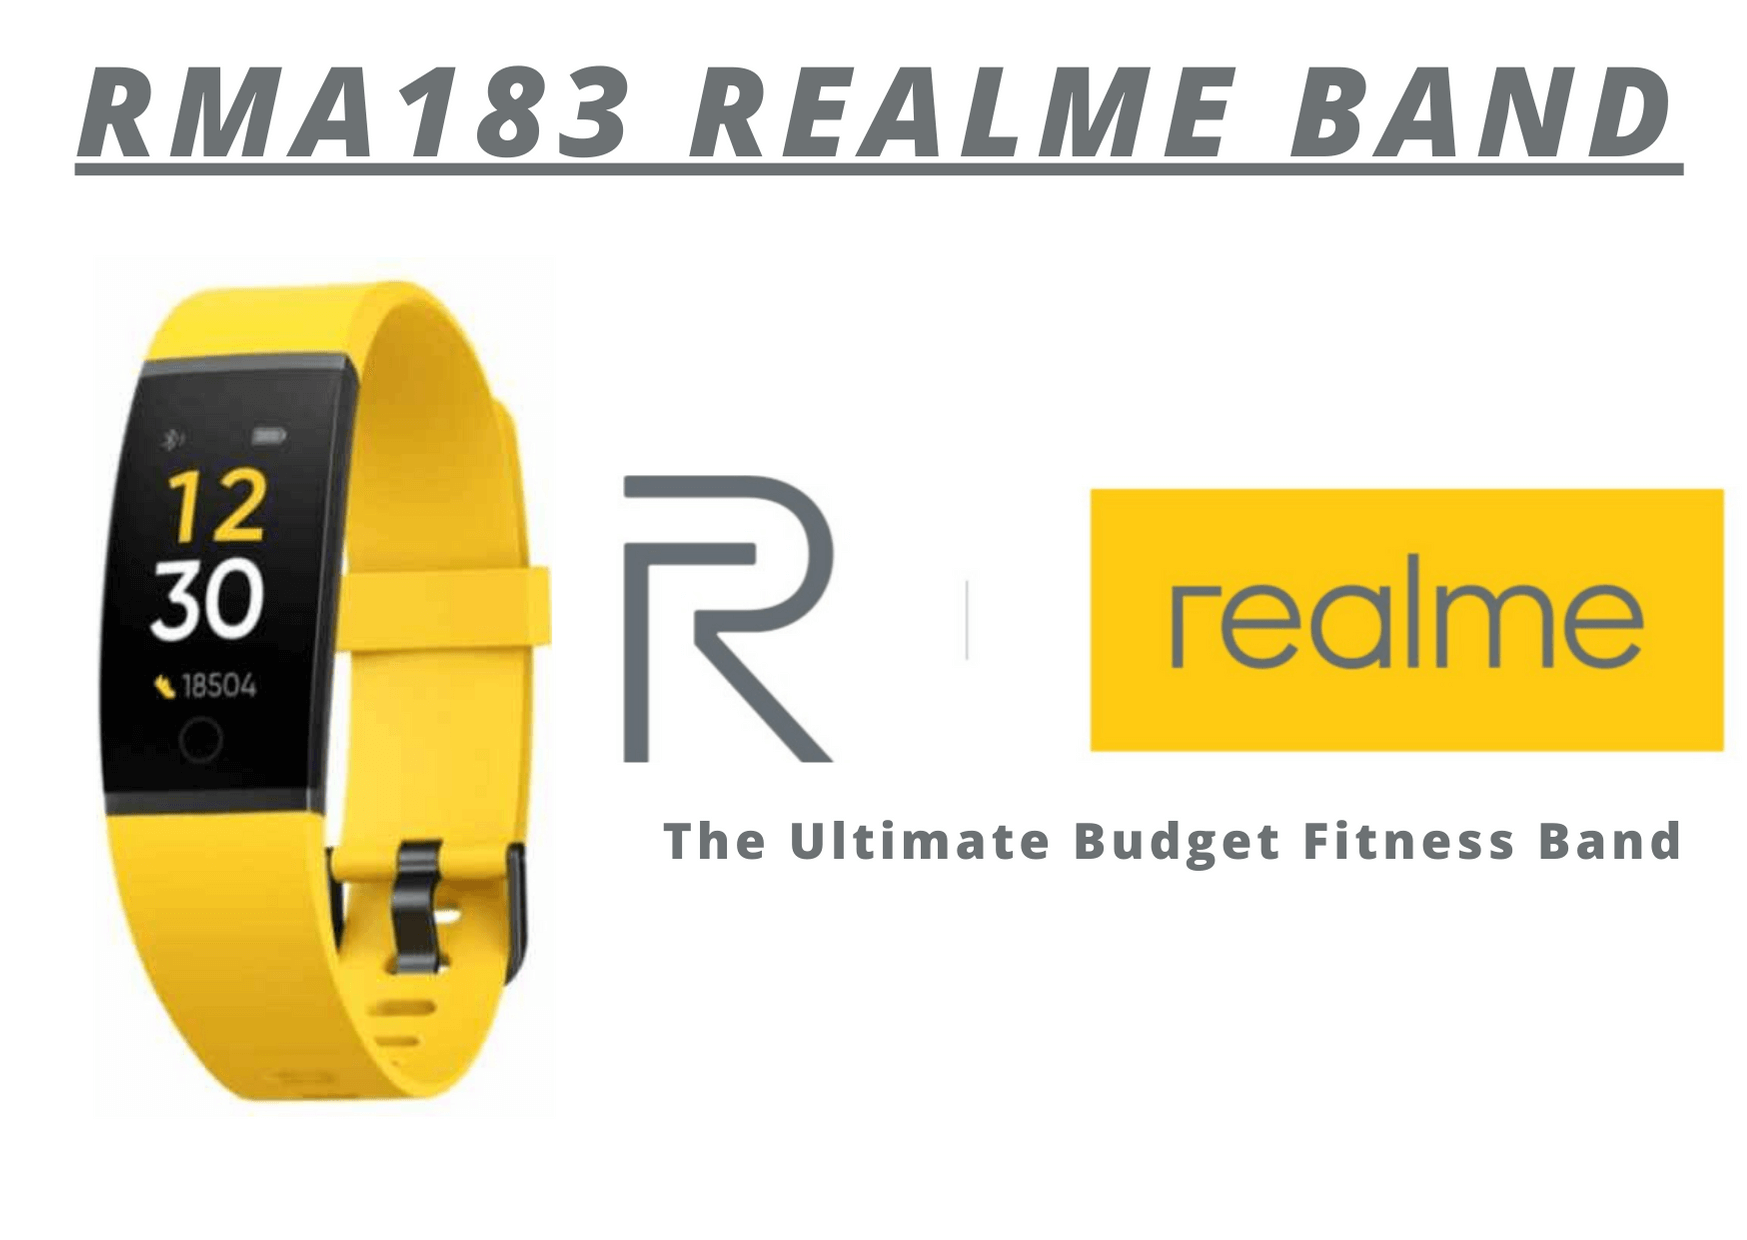 RMA183 Realme Band | The Ultimate Budget Fitness Band